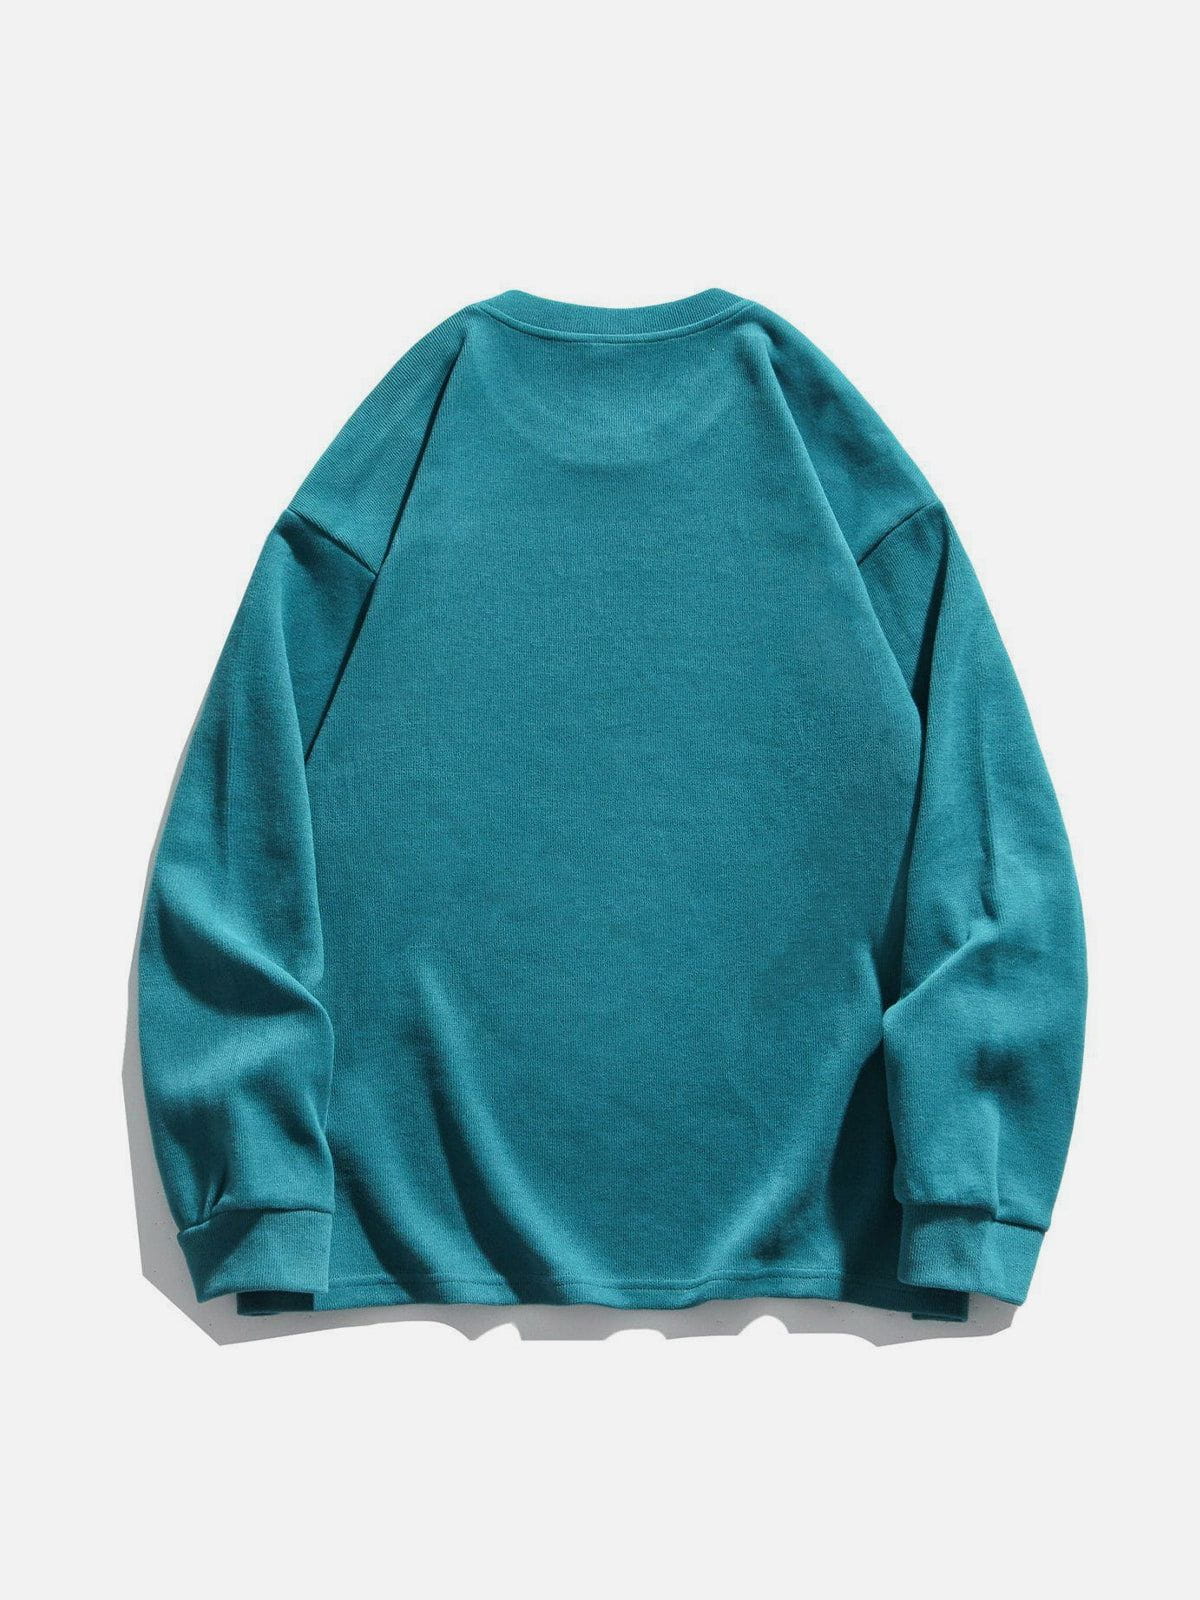 Eprezzy® - Letter Embroidered Sweatshirt Streetwear Fashion - eprezzy.com